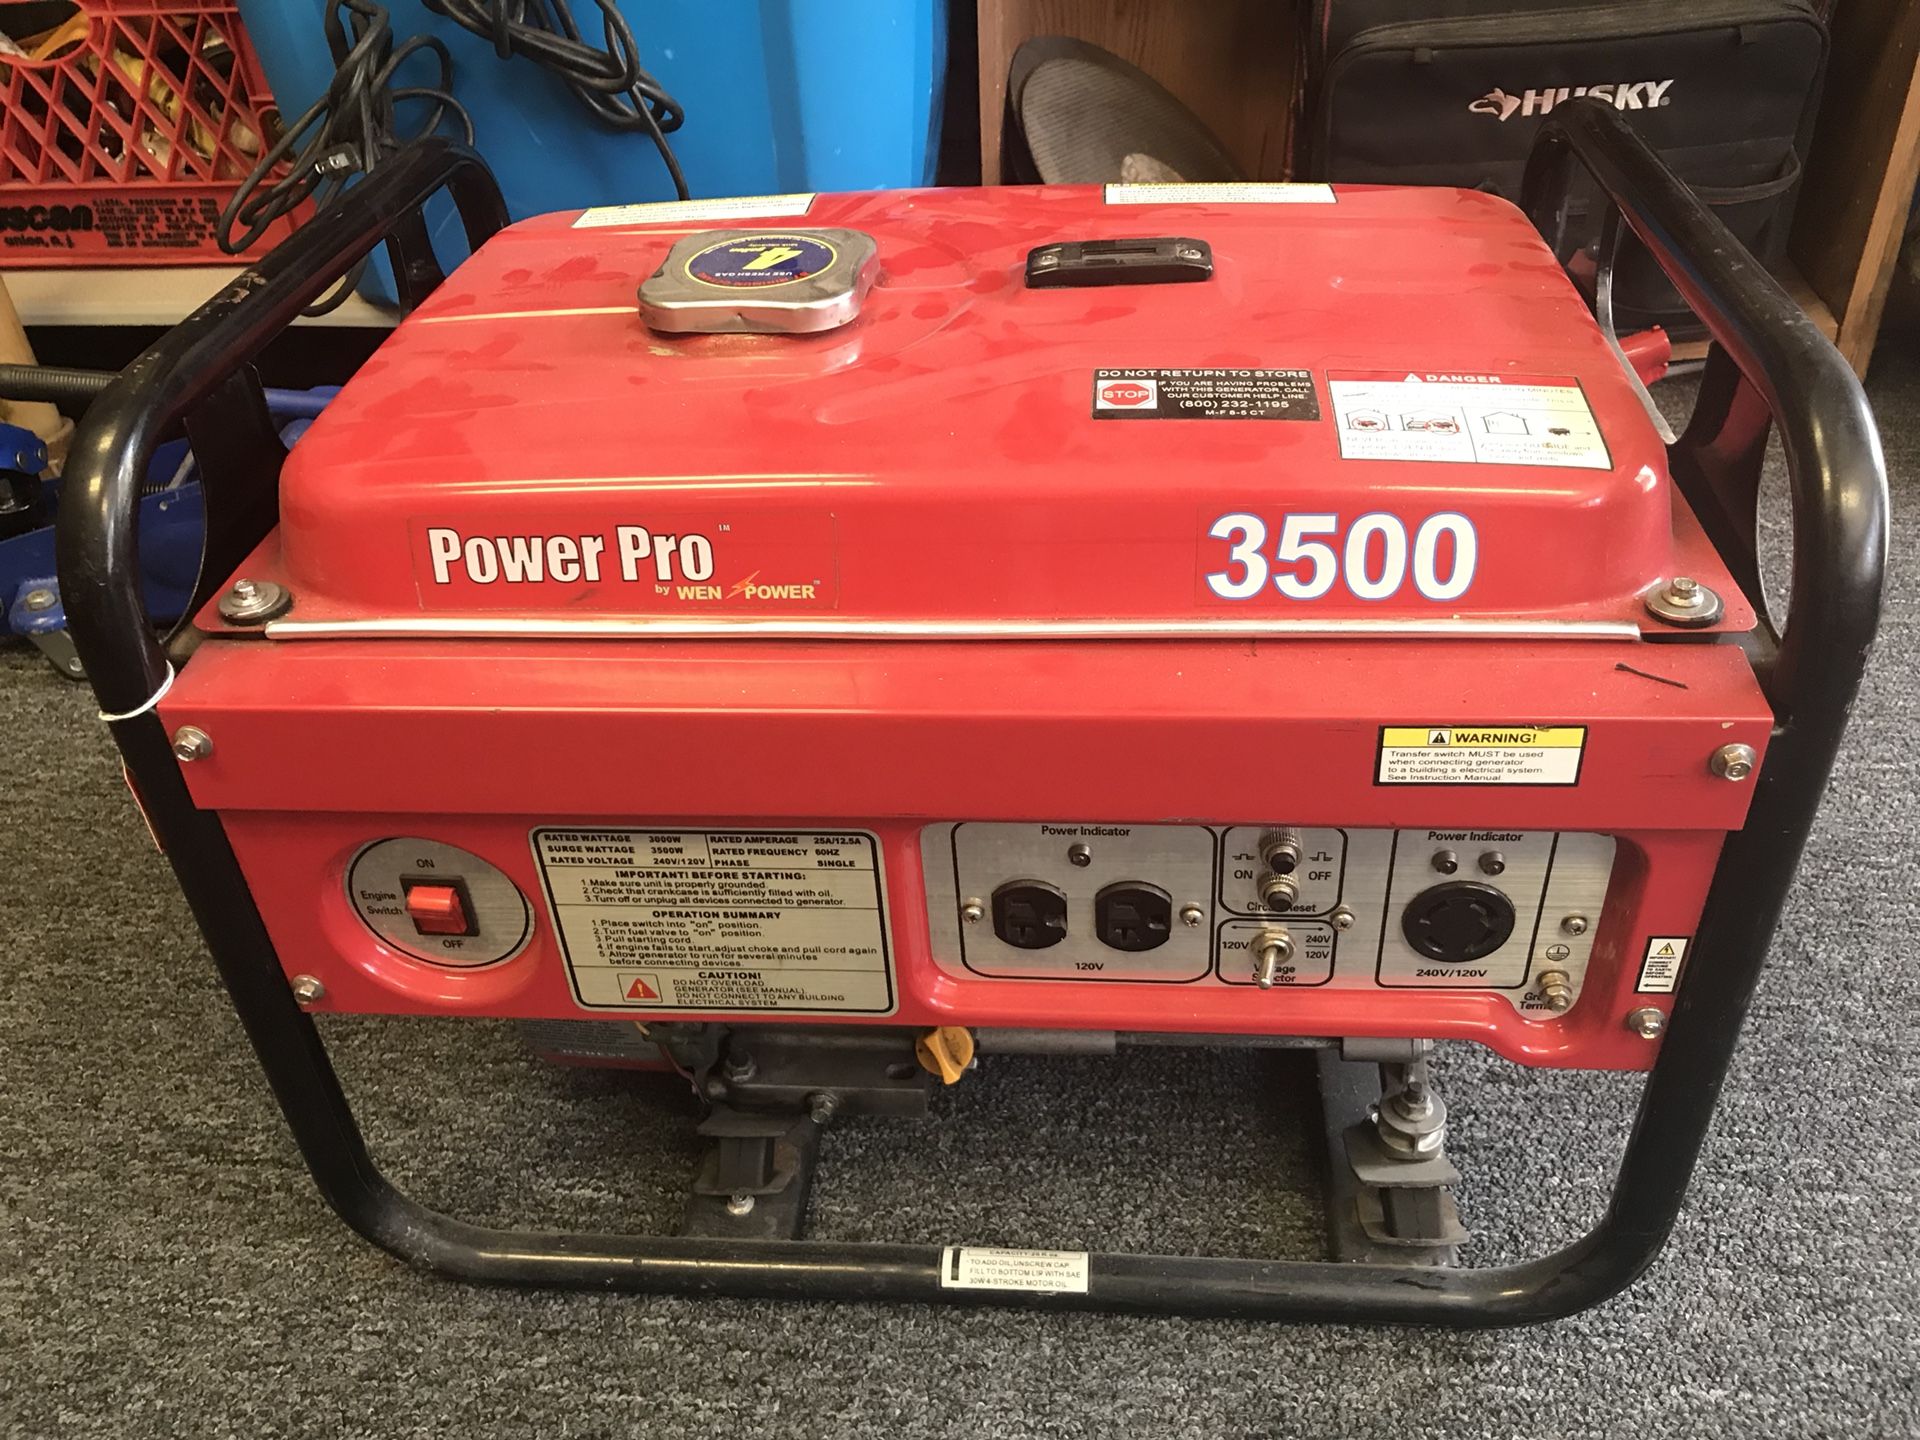 Wen Power pro 3500 Gas Powered Generator 6.5 HP